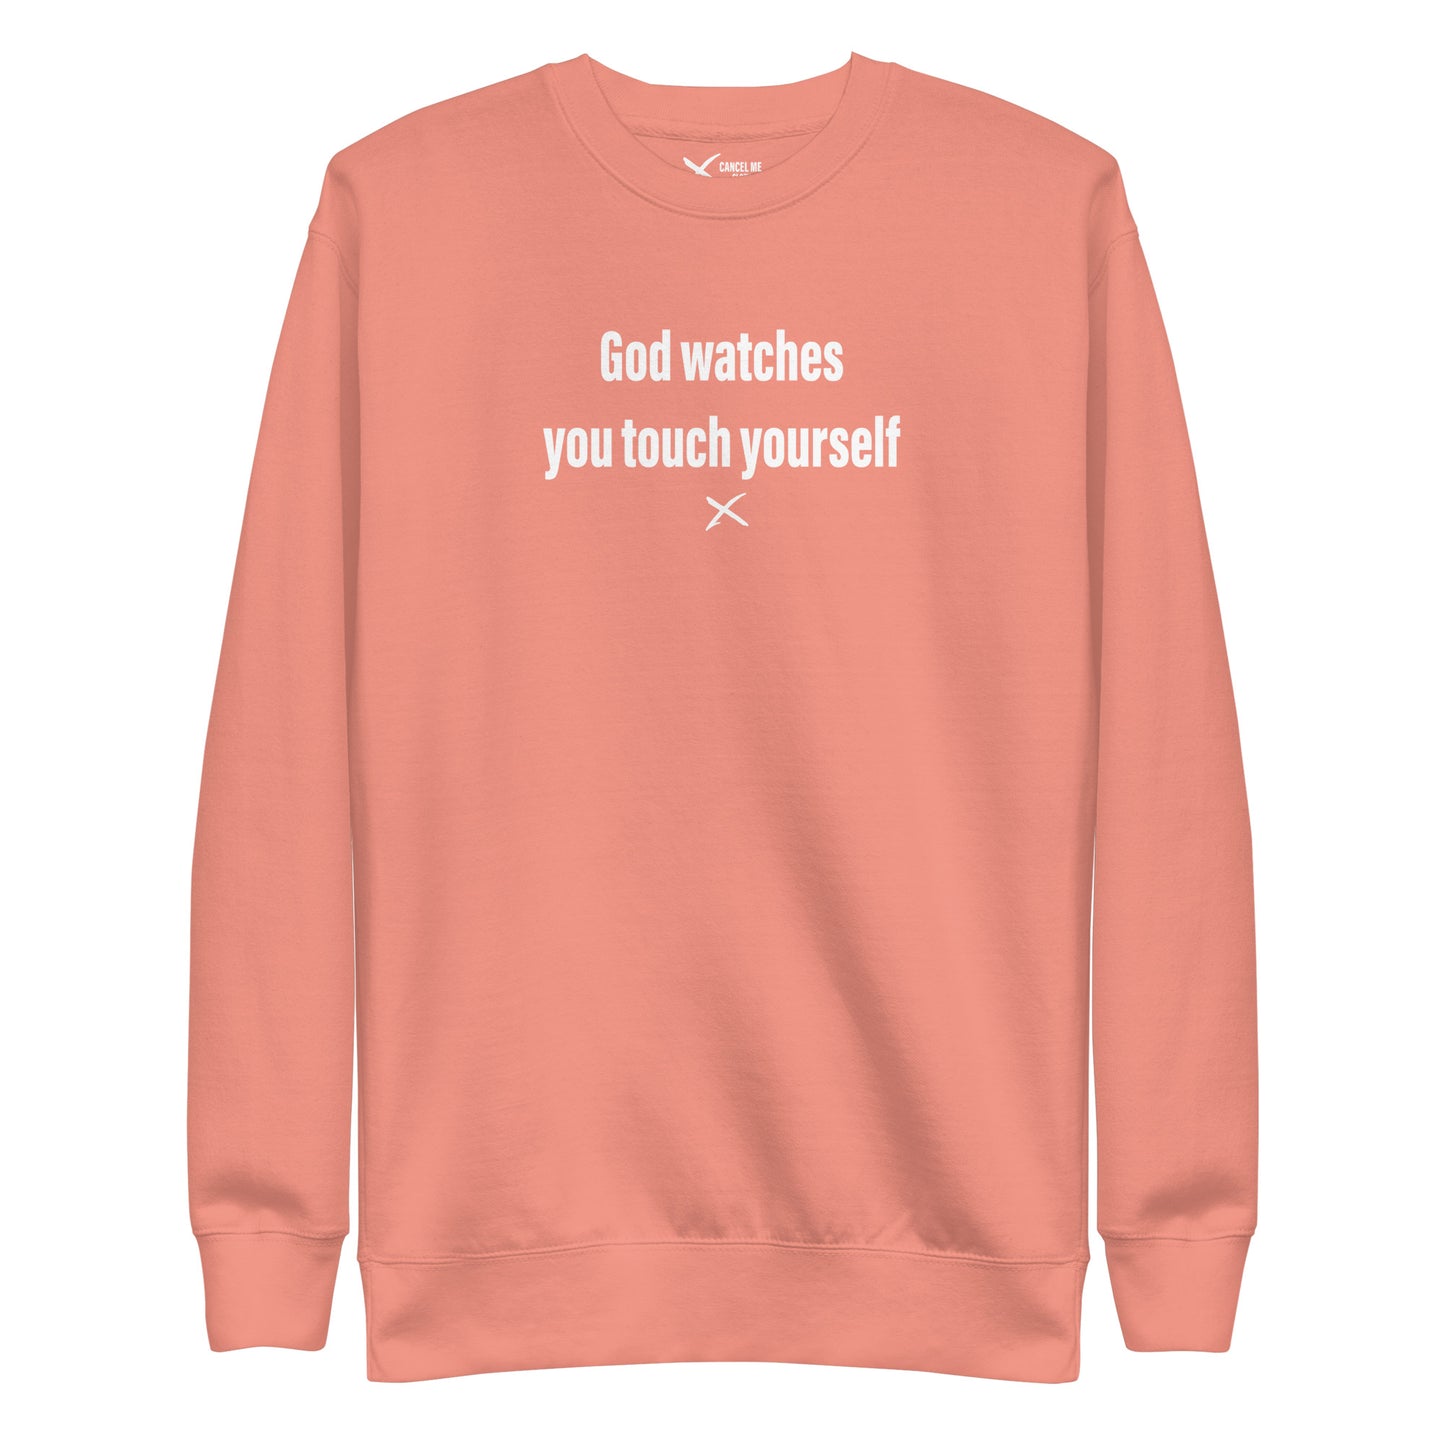 God watches you touch yourself - Sweatshirt